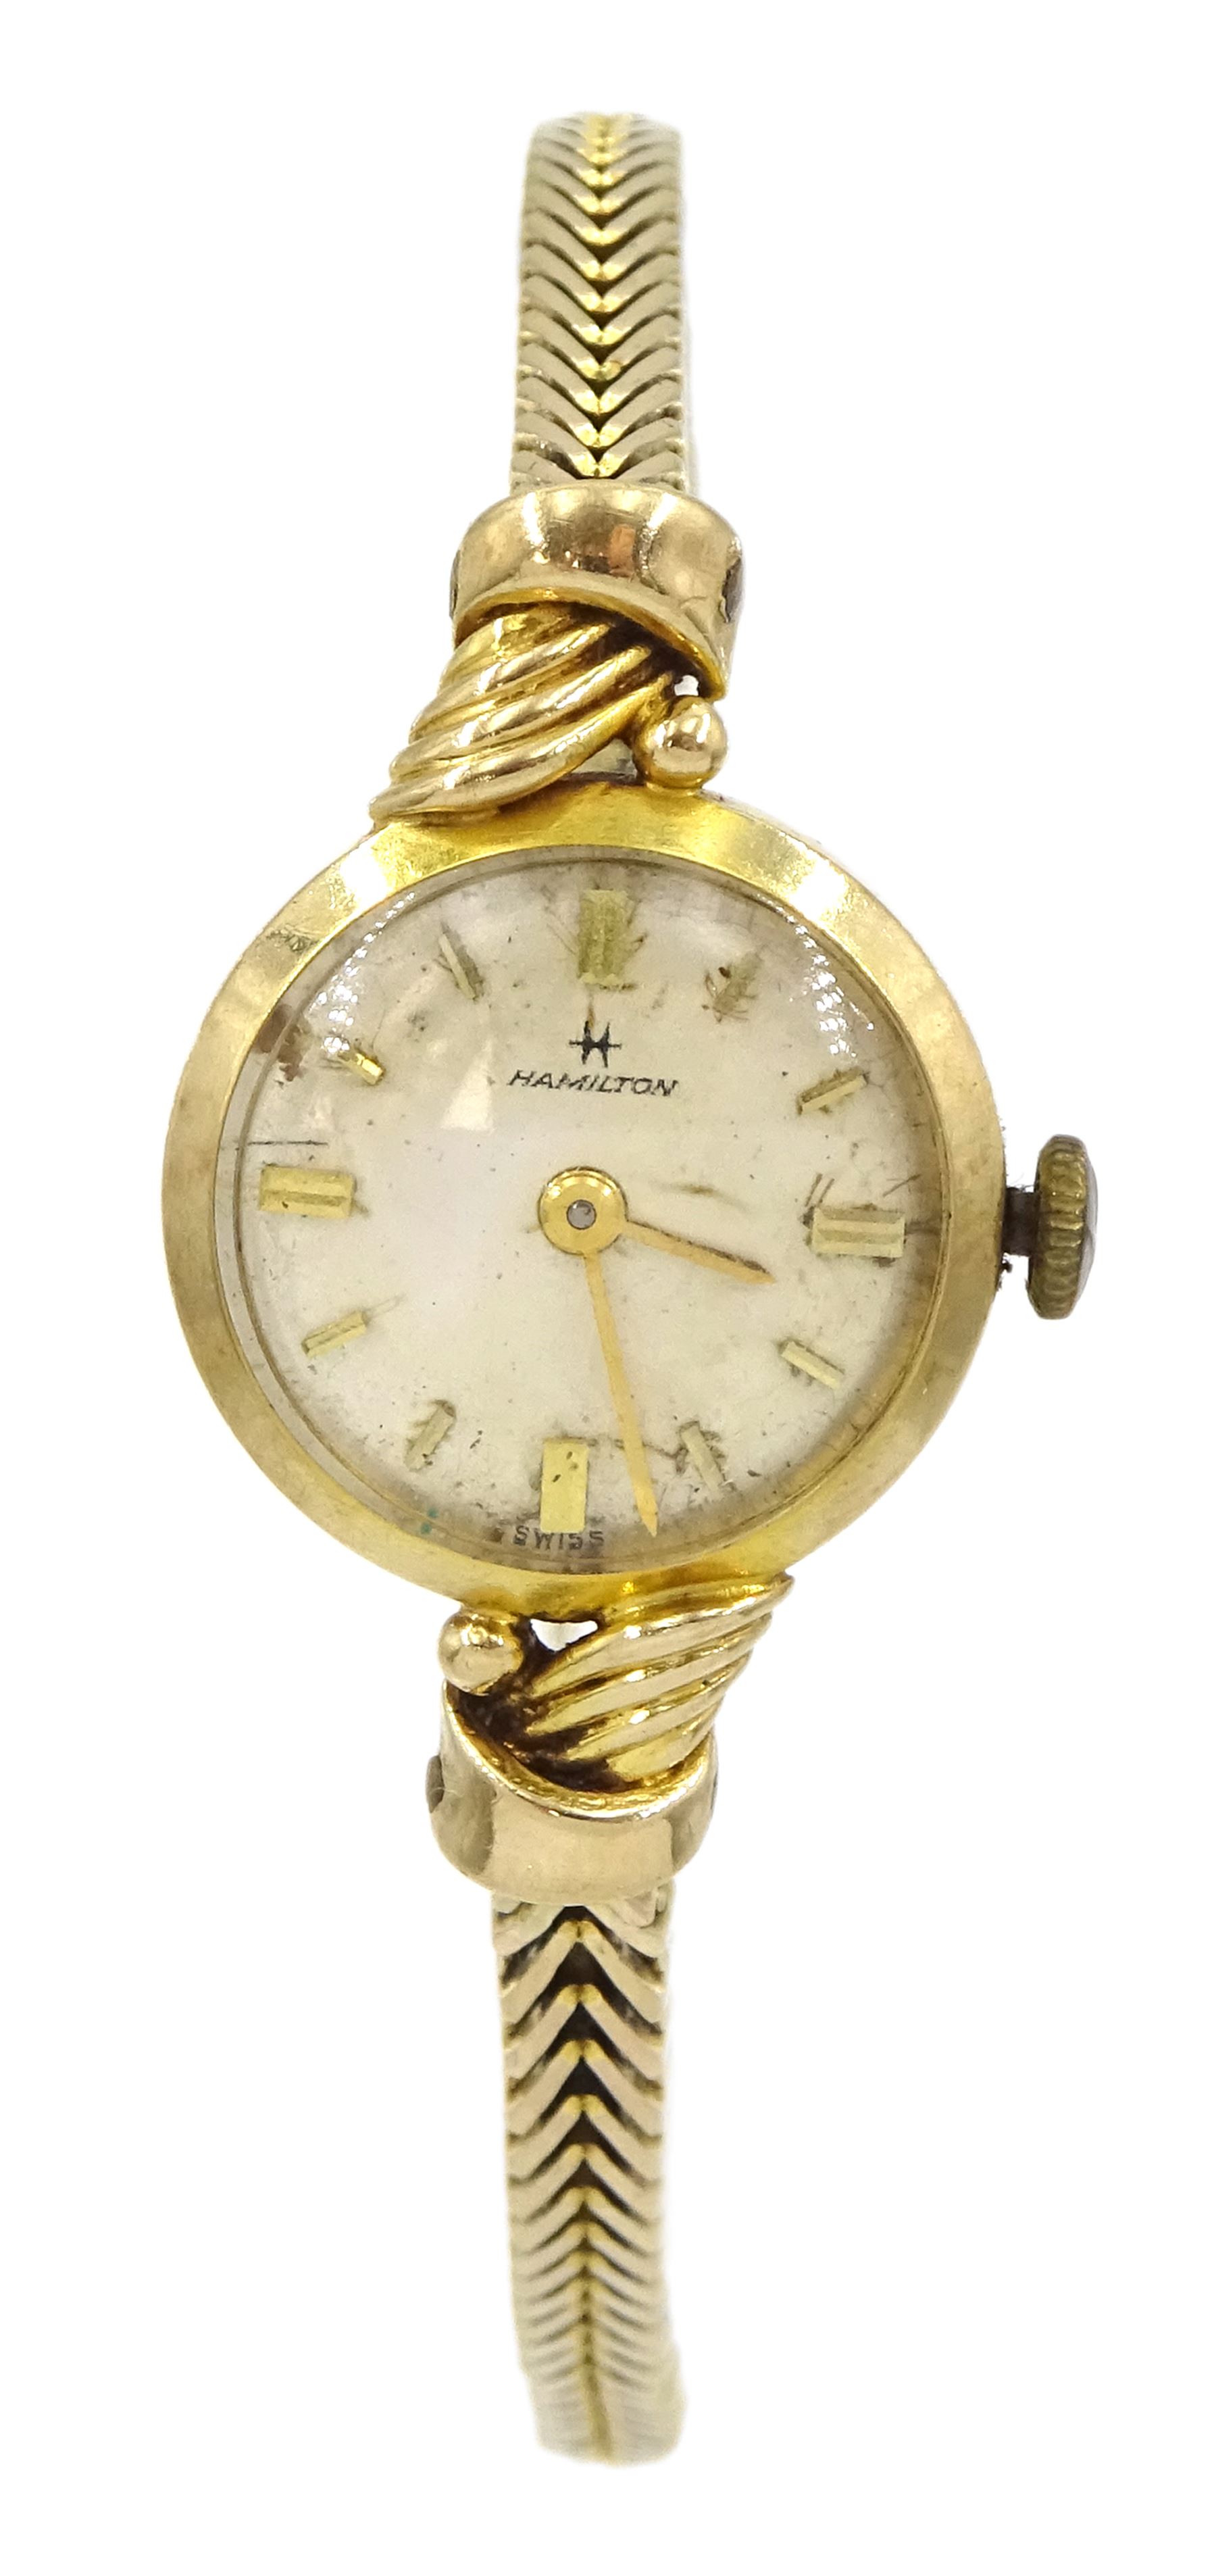 Hamilton ladies 9ct gold manual wind bracelet wristwatch